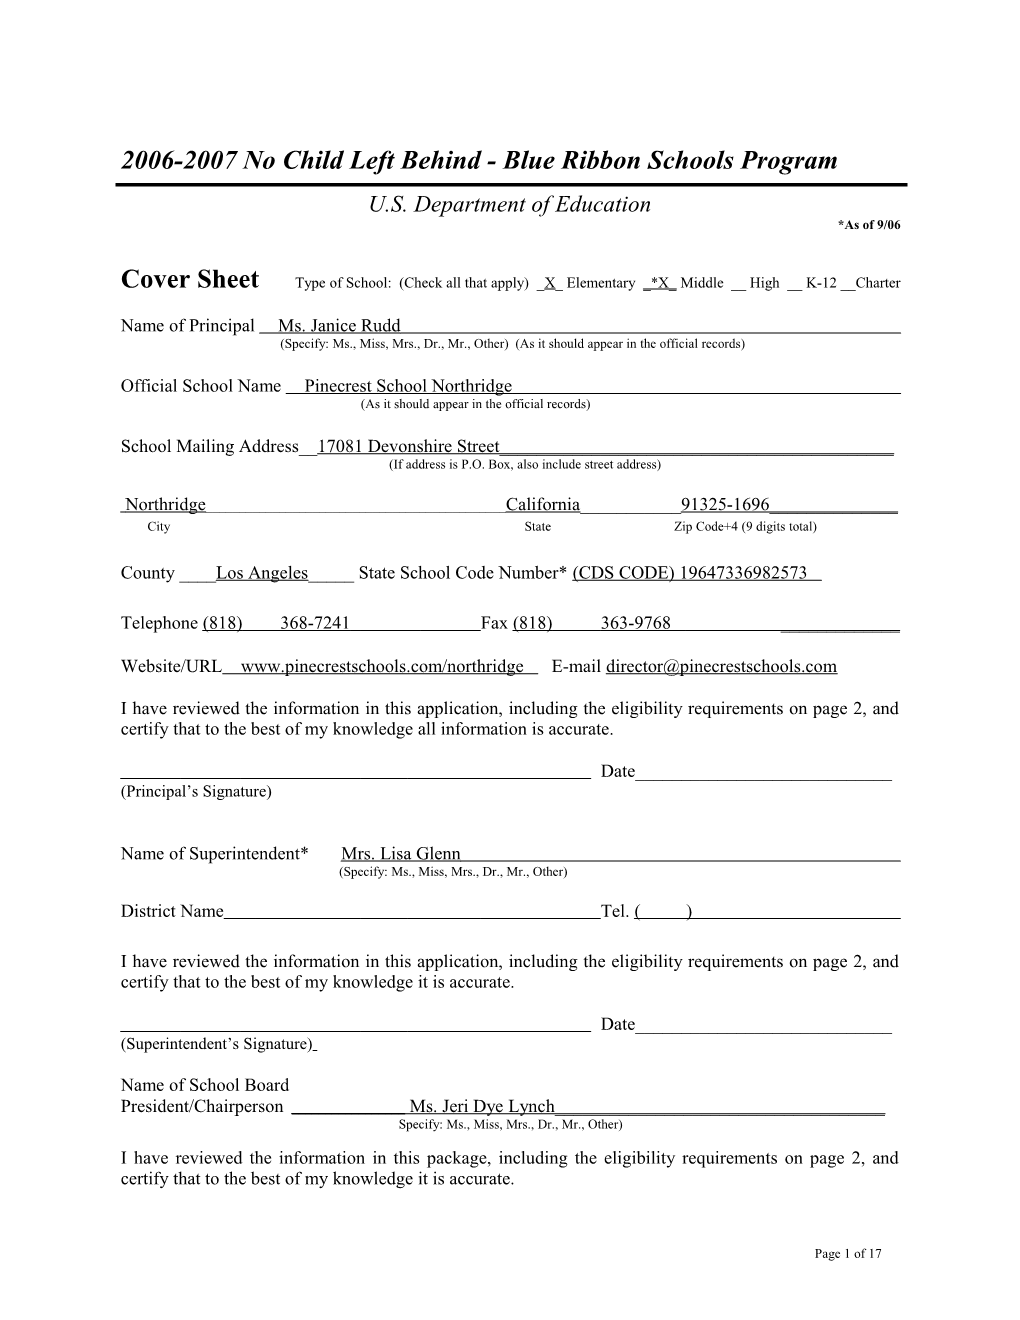 Application: 2006-2007, No Child Left Behind - Blue Ribbon Schools Program (MS Word) s9